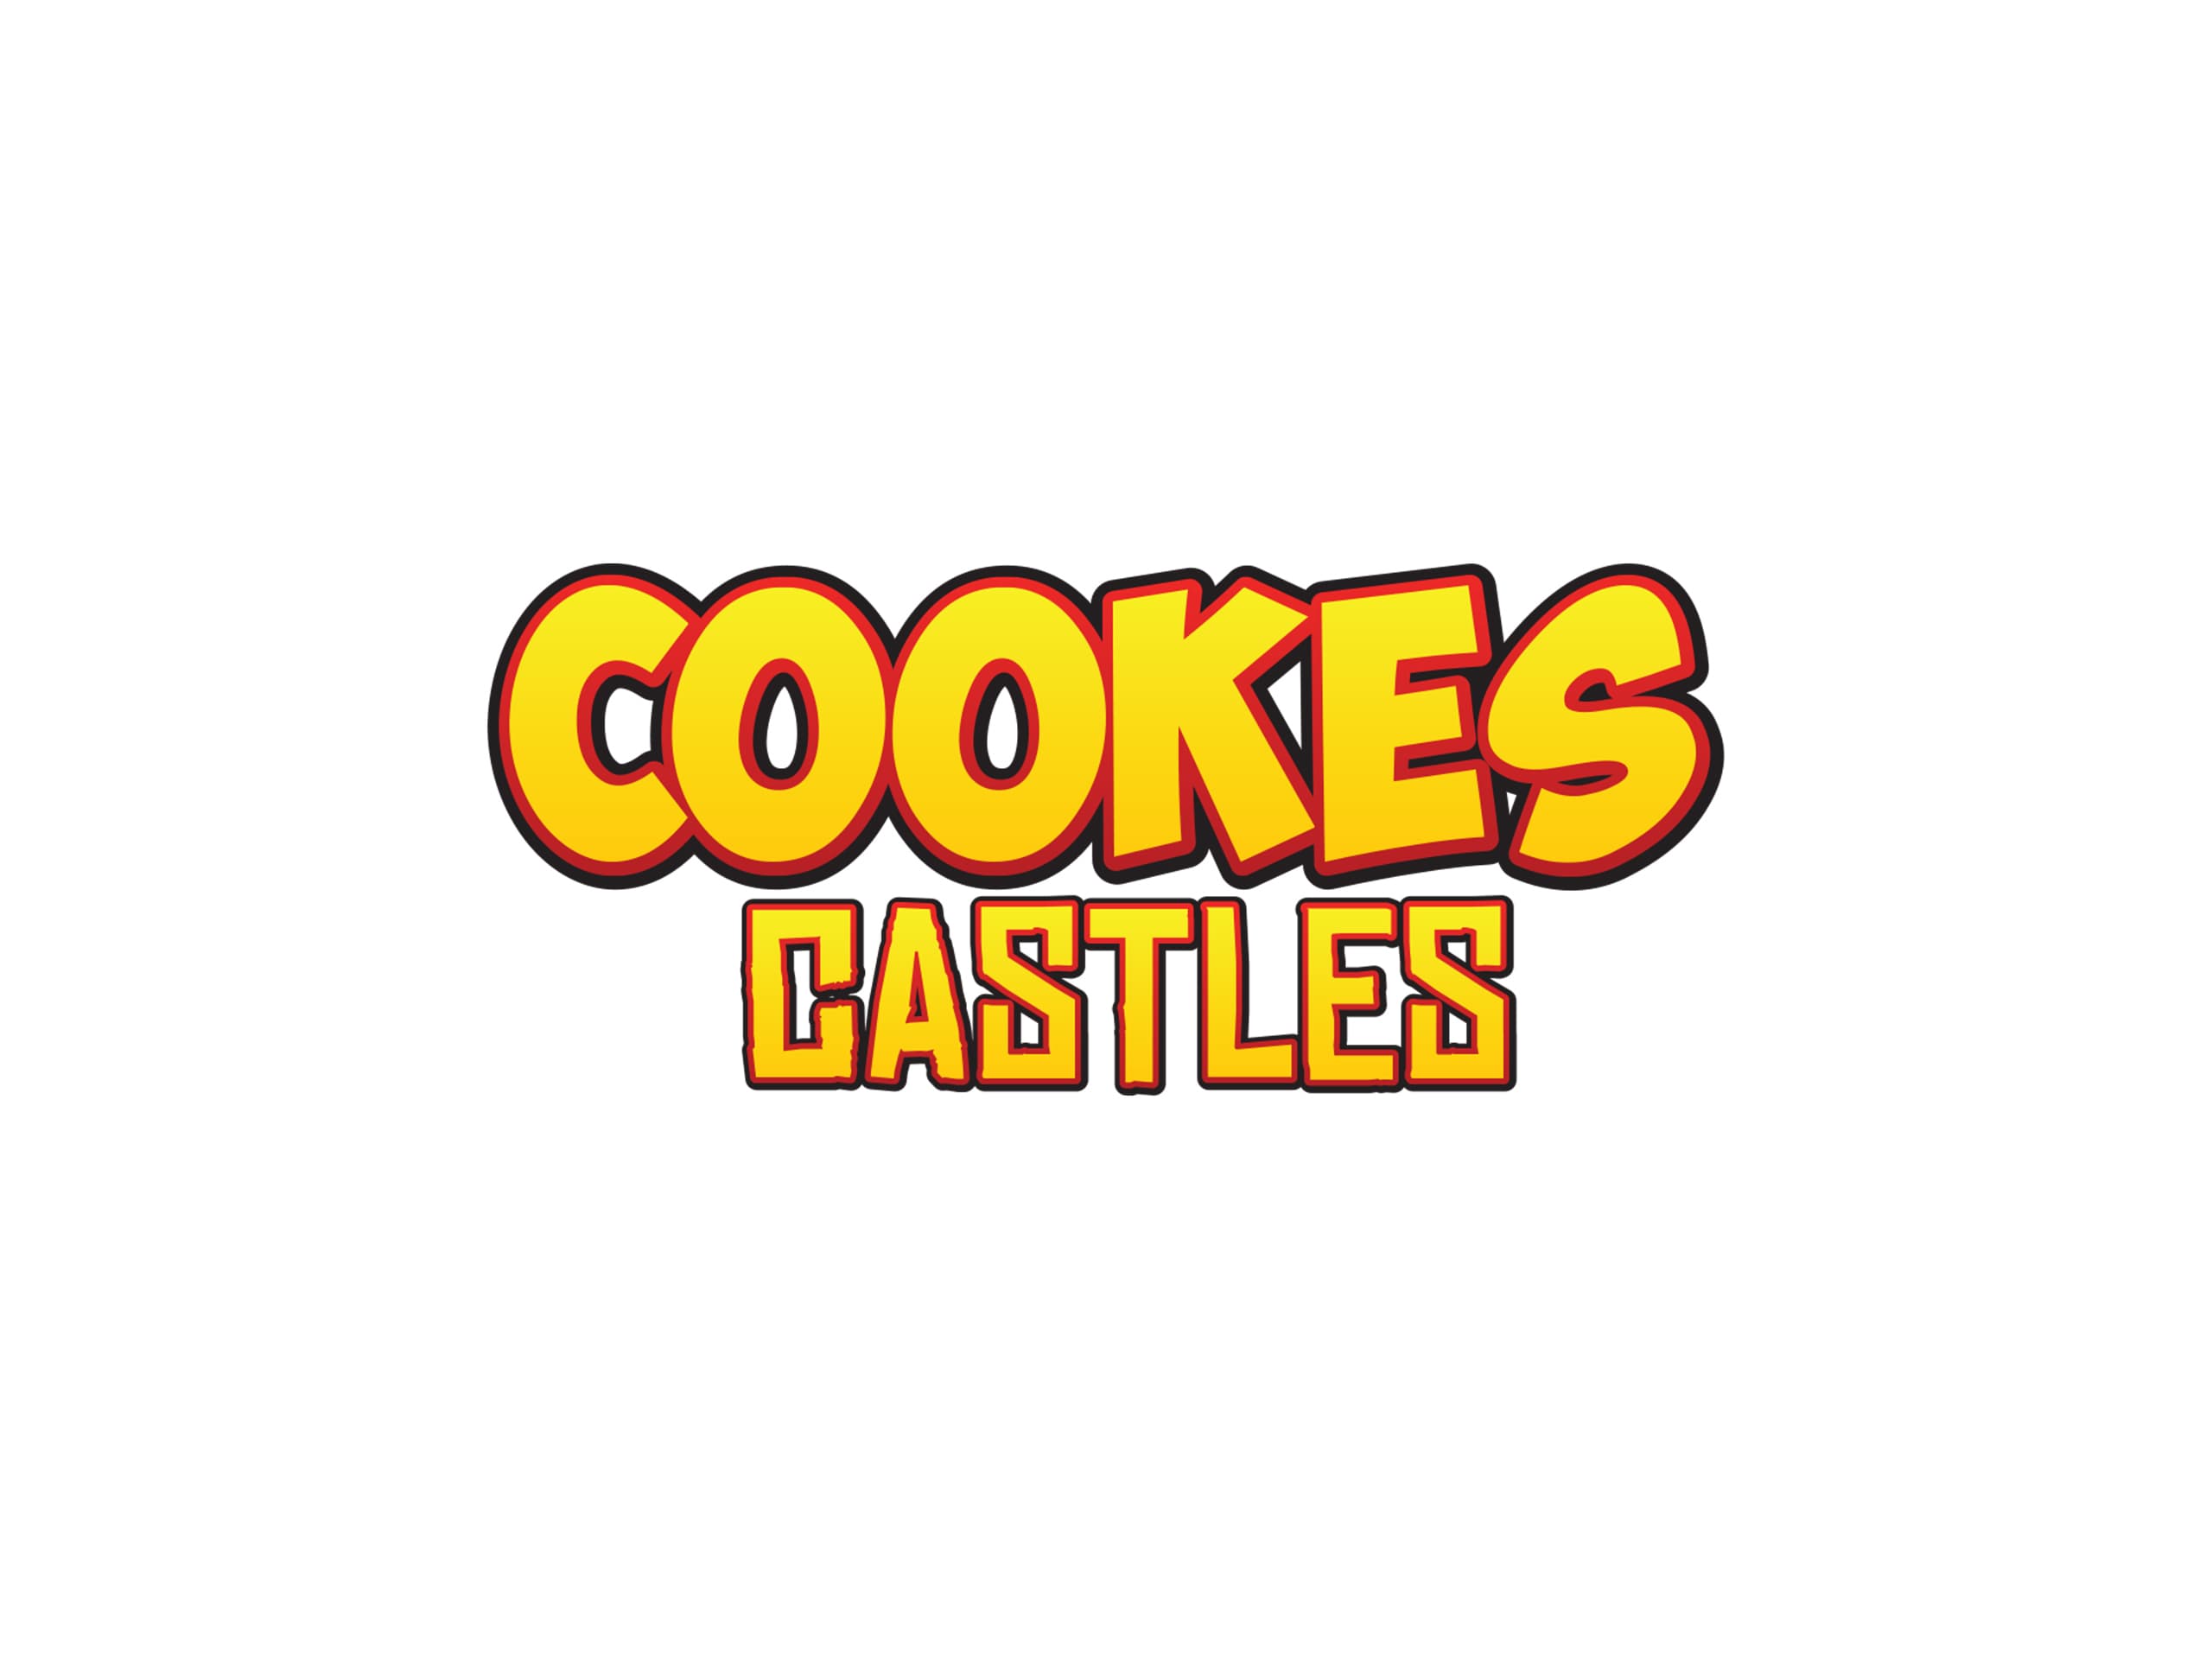 Cookes Castles